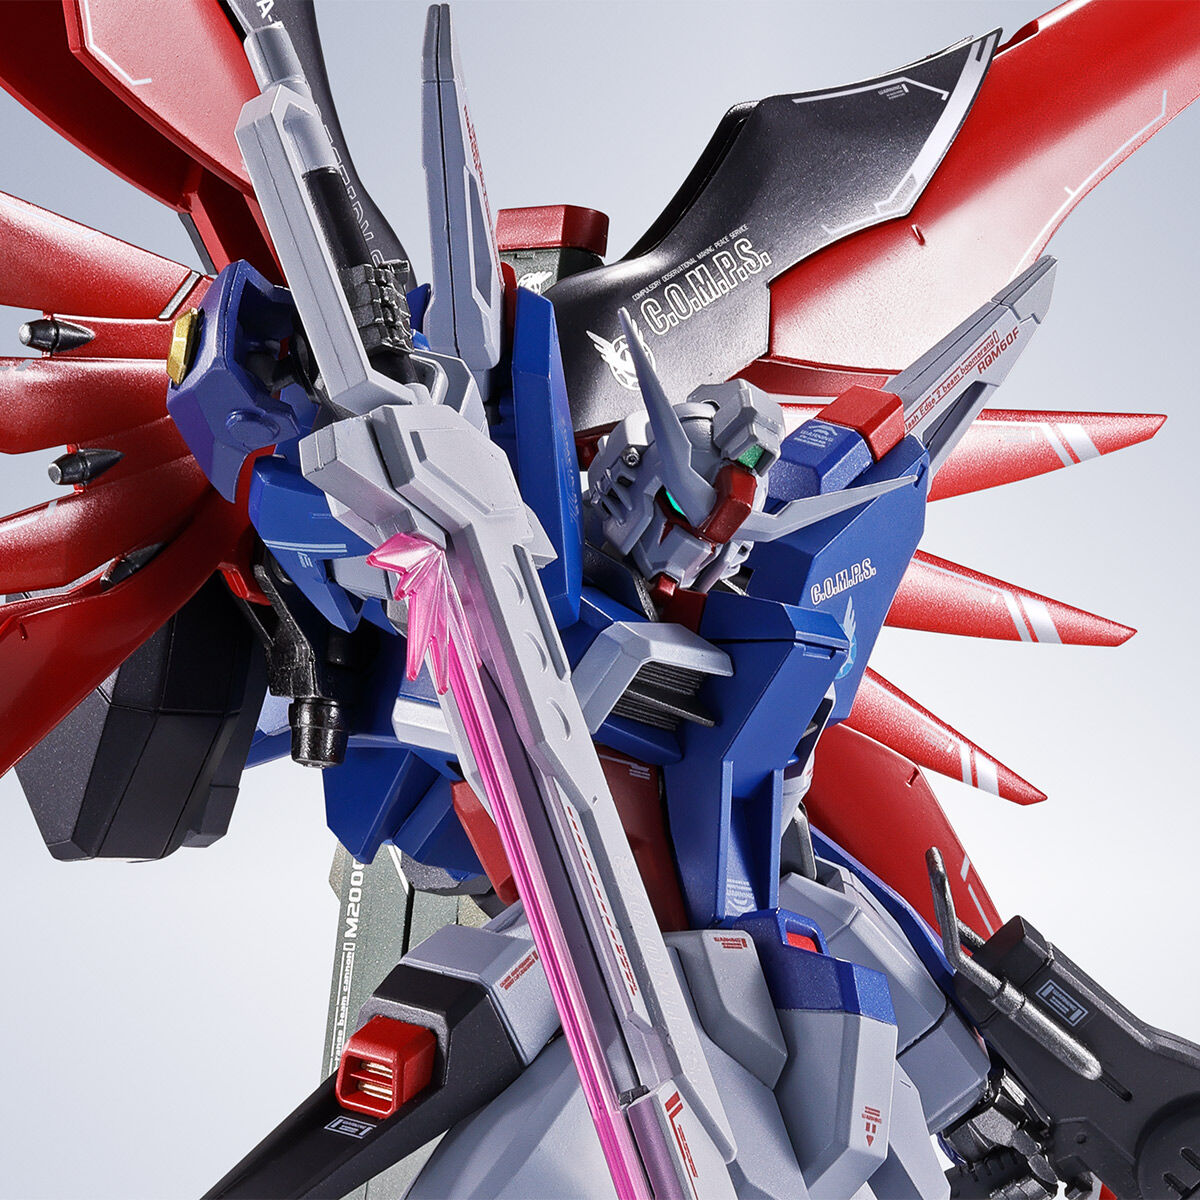 Metal Robot Spirits(Side MS) ZGMF/A-42S2 Destiny Gundam Spec Ⅱ